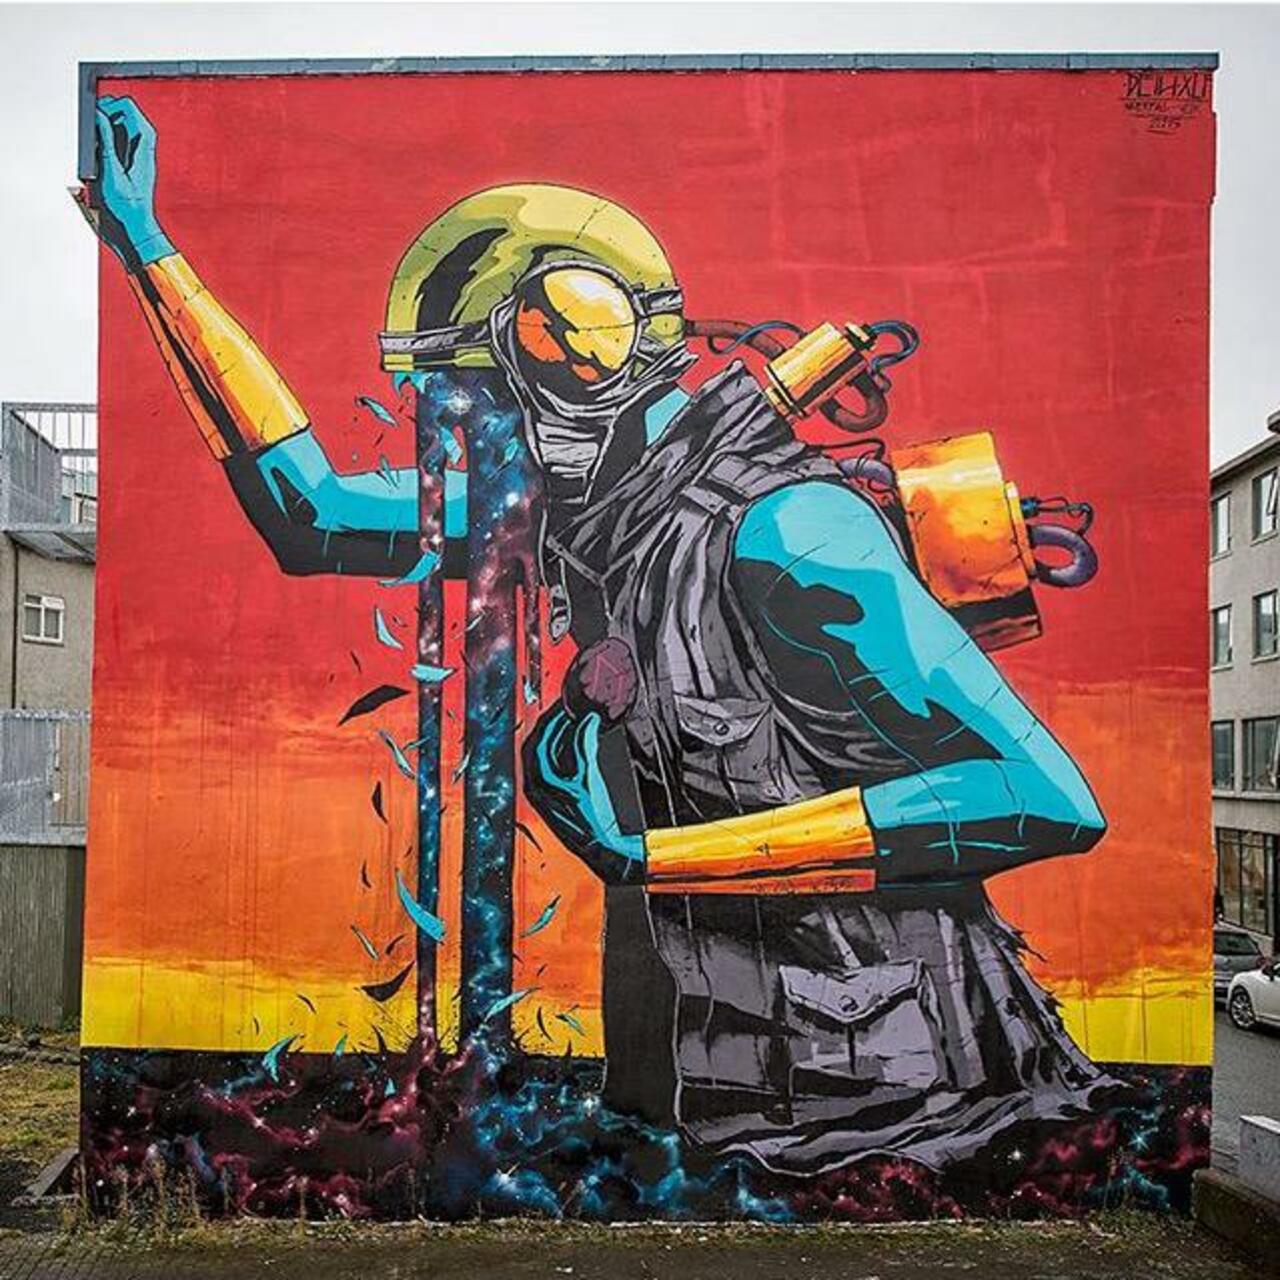 Street Art by Deih in Reykjavik 

#art #graffiti #mural #streetart https://t.co/7HQwT8P3Af